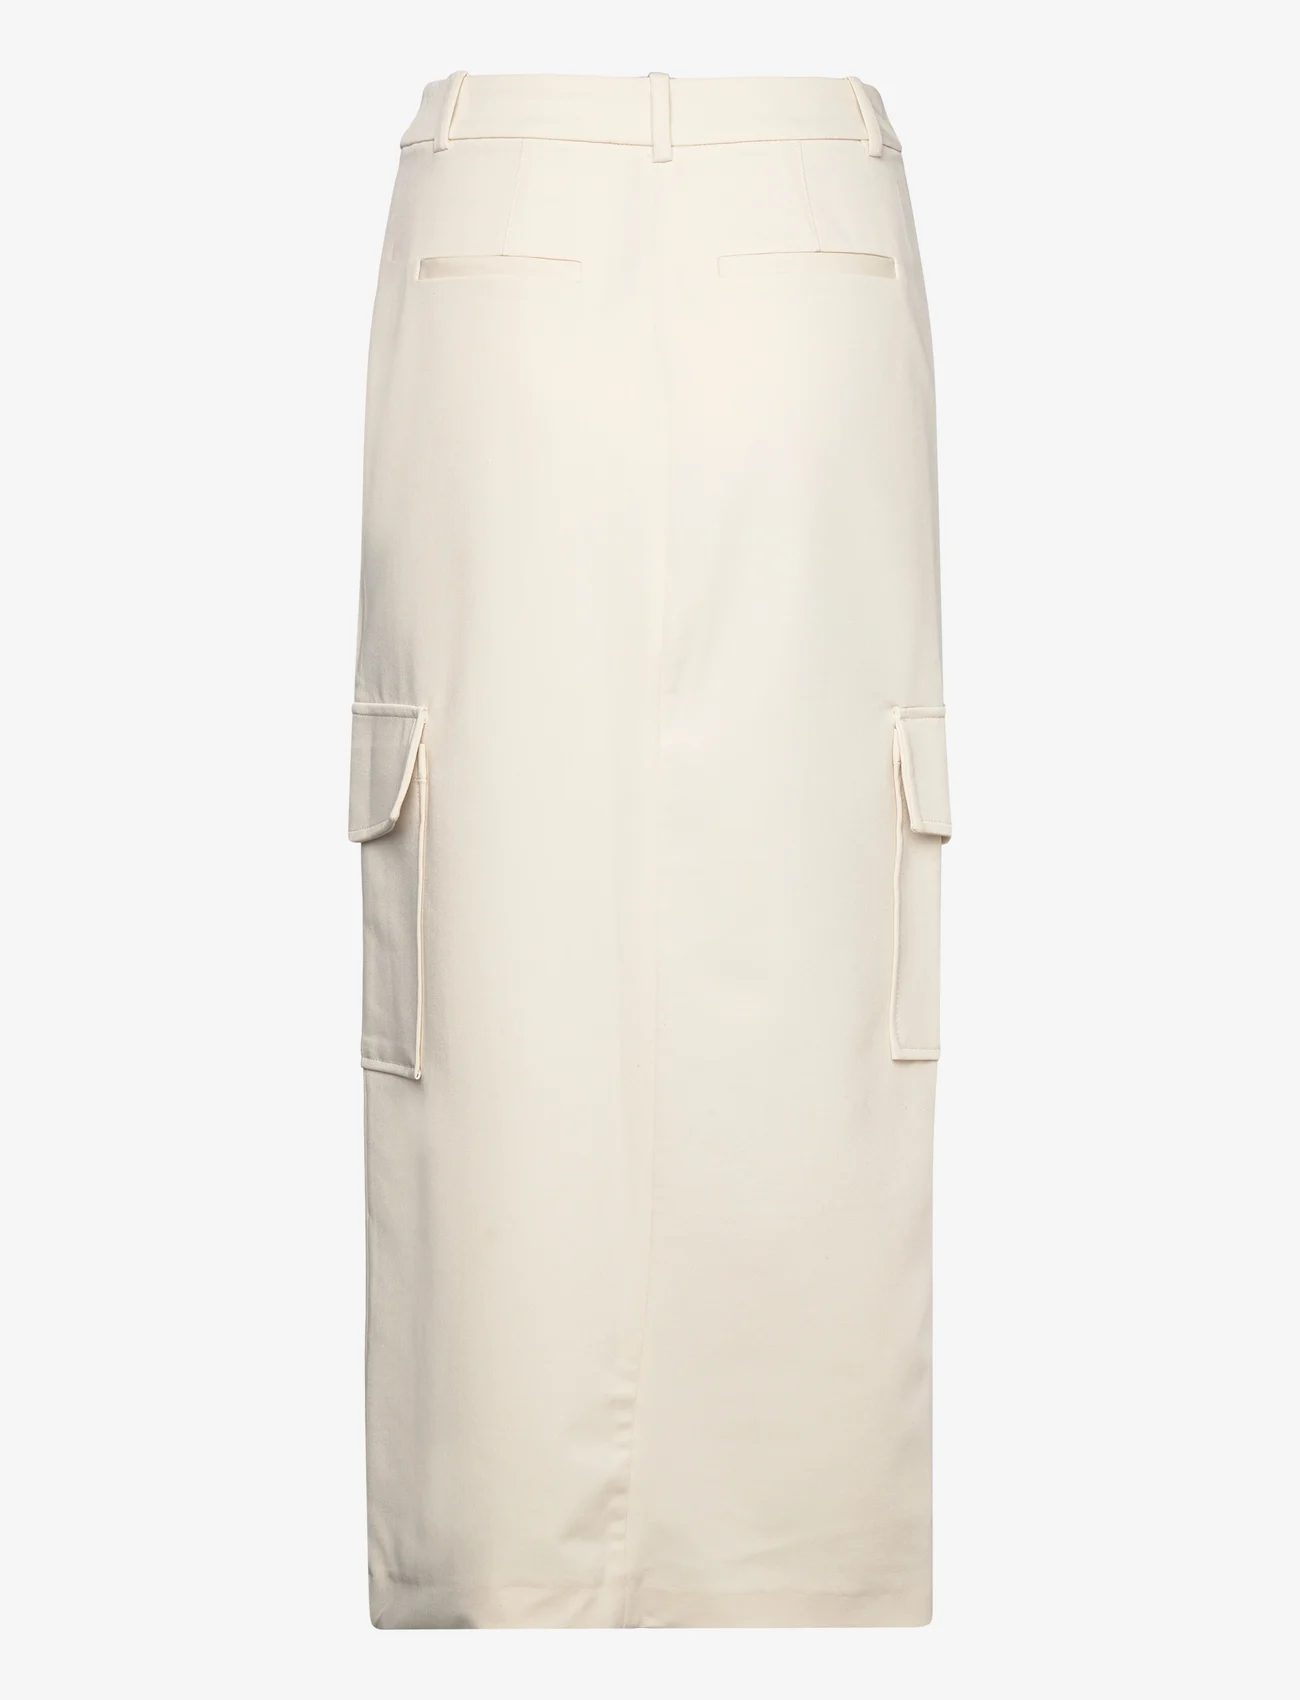 Mango - Cargo skirt with slit - pencil skirts - light beige - 1